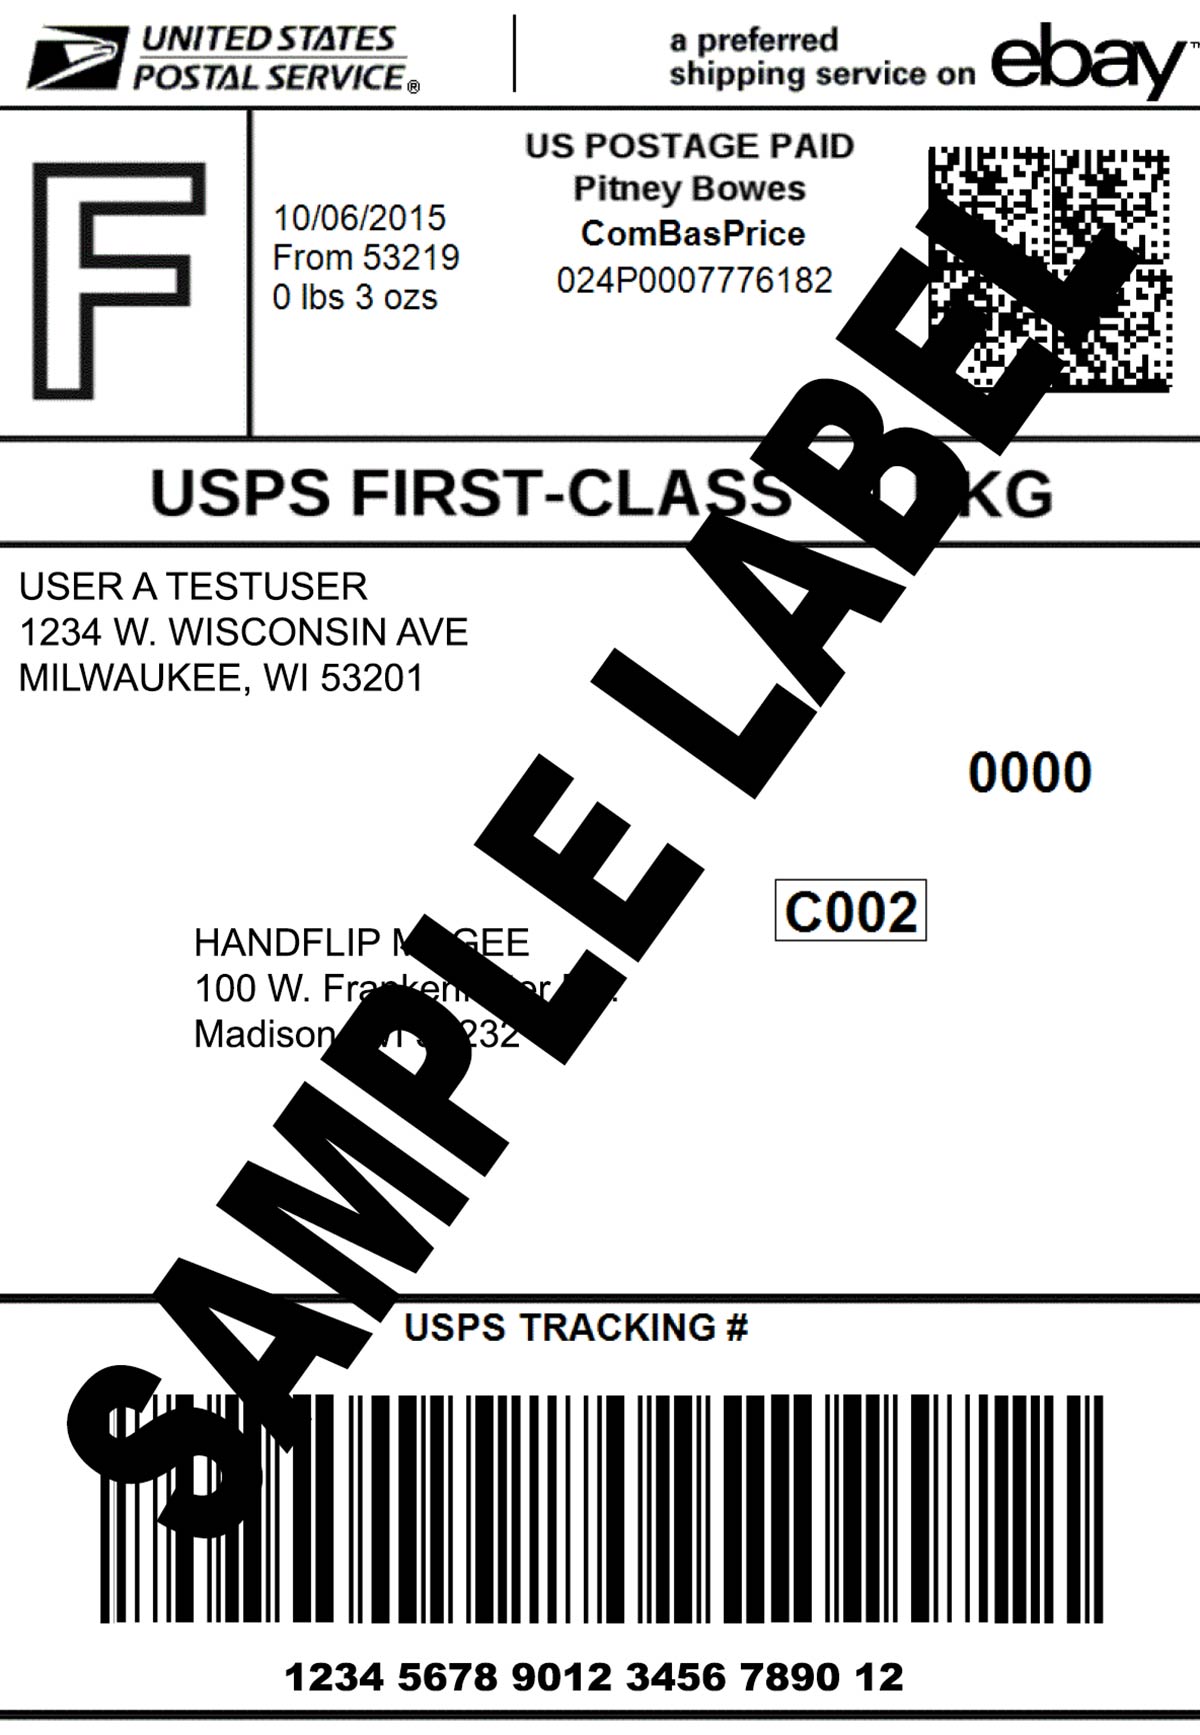 Thermal Printer Test - Good Shipping Label